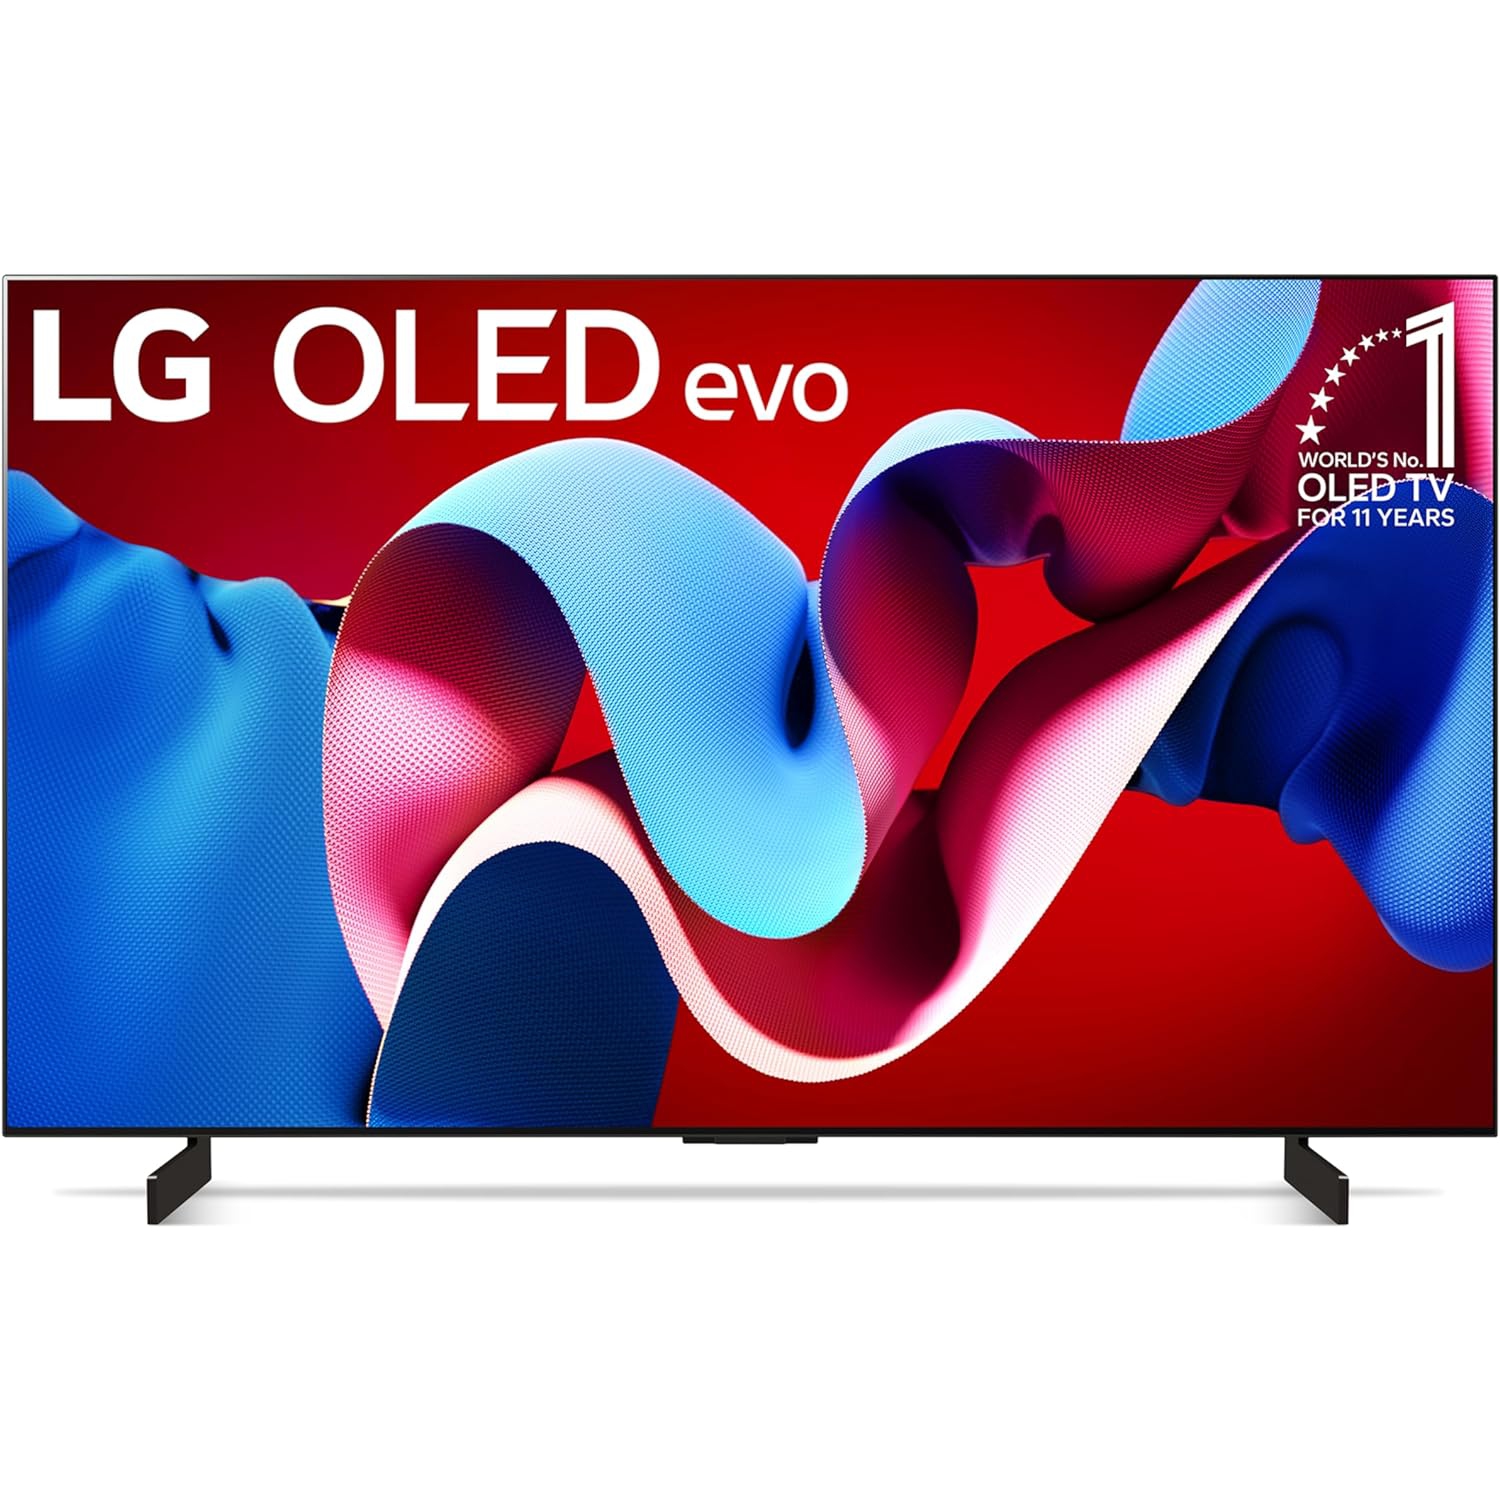 LG 42-Inch C4 OLED evo 4K Smart TV - α9 AI Processor 4K, Alexa Built-in, 144Hz Refresh Rate, HDMI 2.1 - (OLED42C4PUA) Open Box (10/10 Condition)